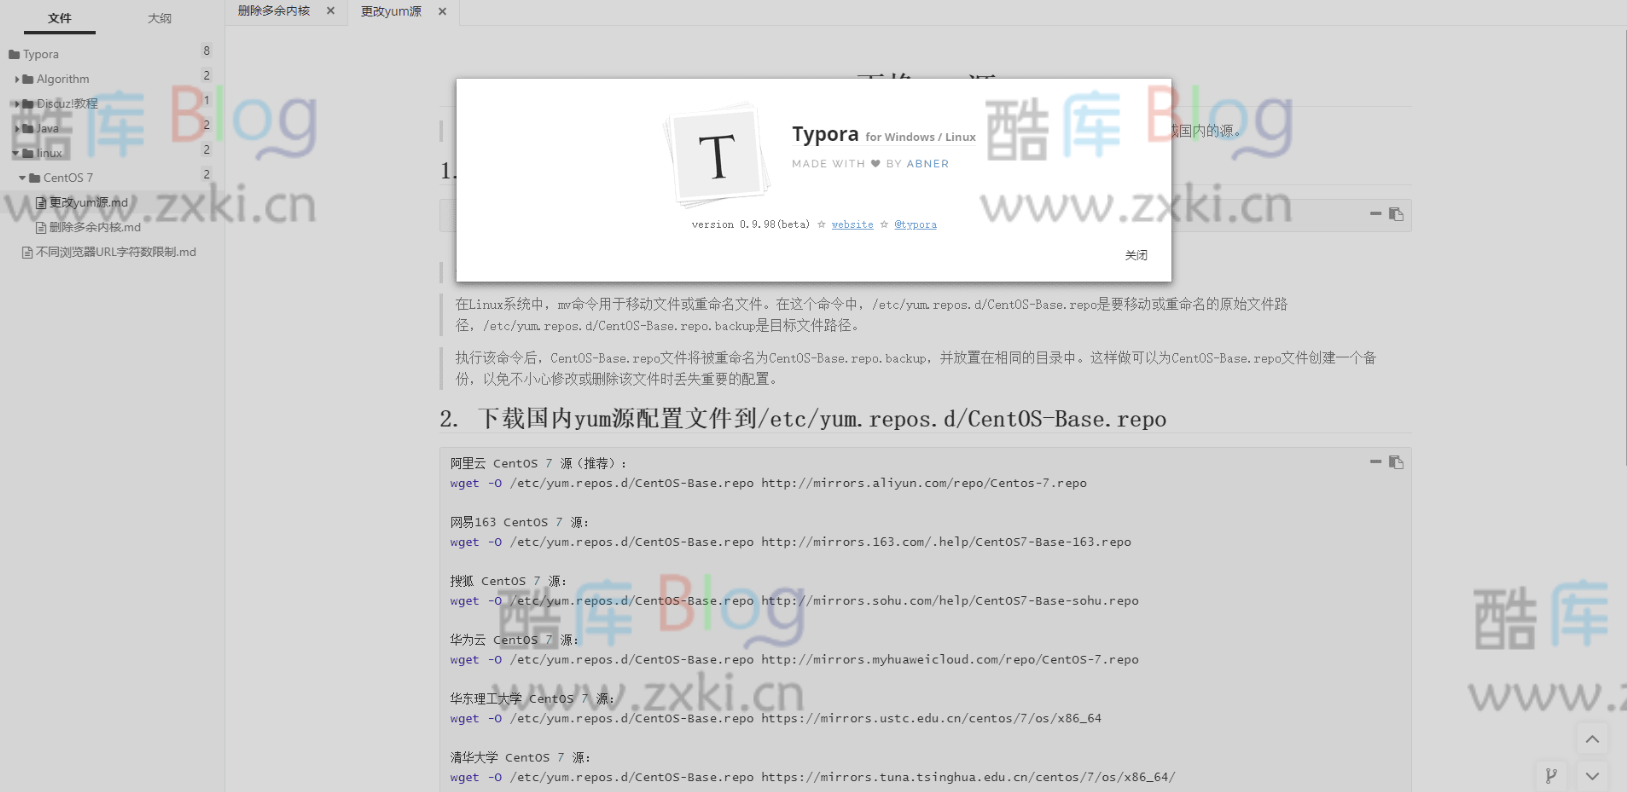 Typora0.9.98(beta)集成插件自整合免安装版